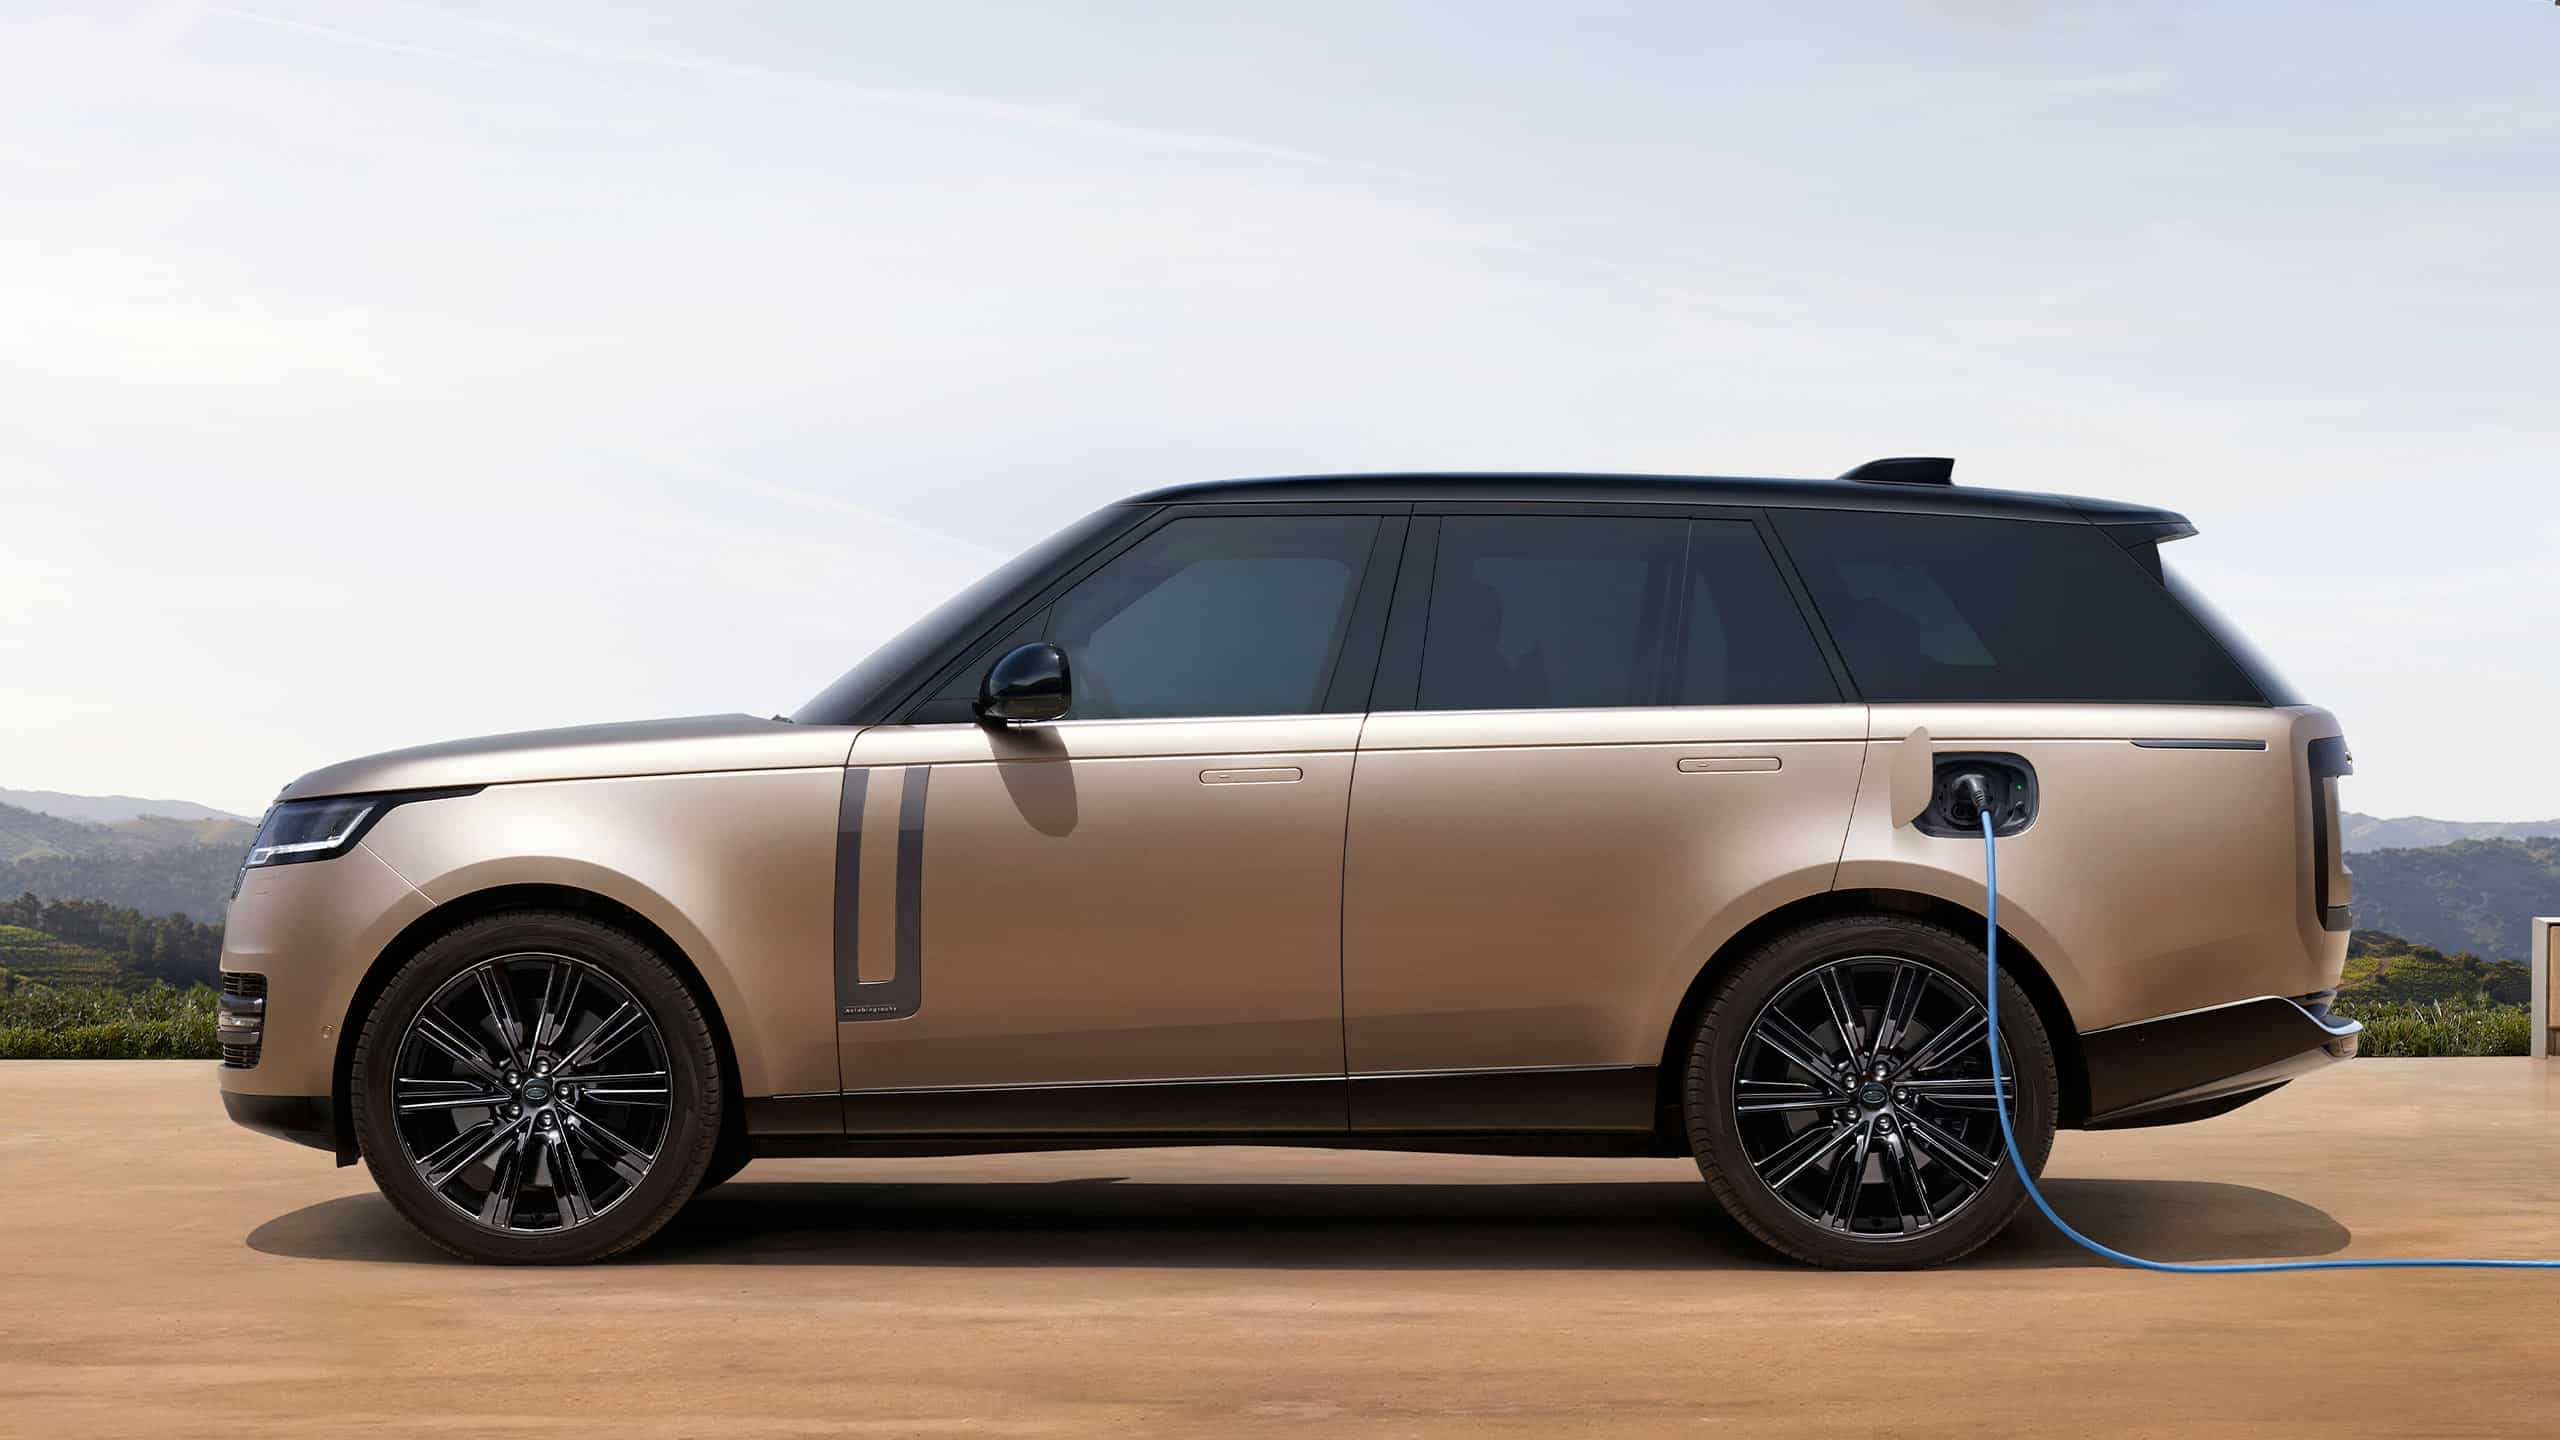 Range Rover. Luxury Performance SUV